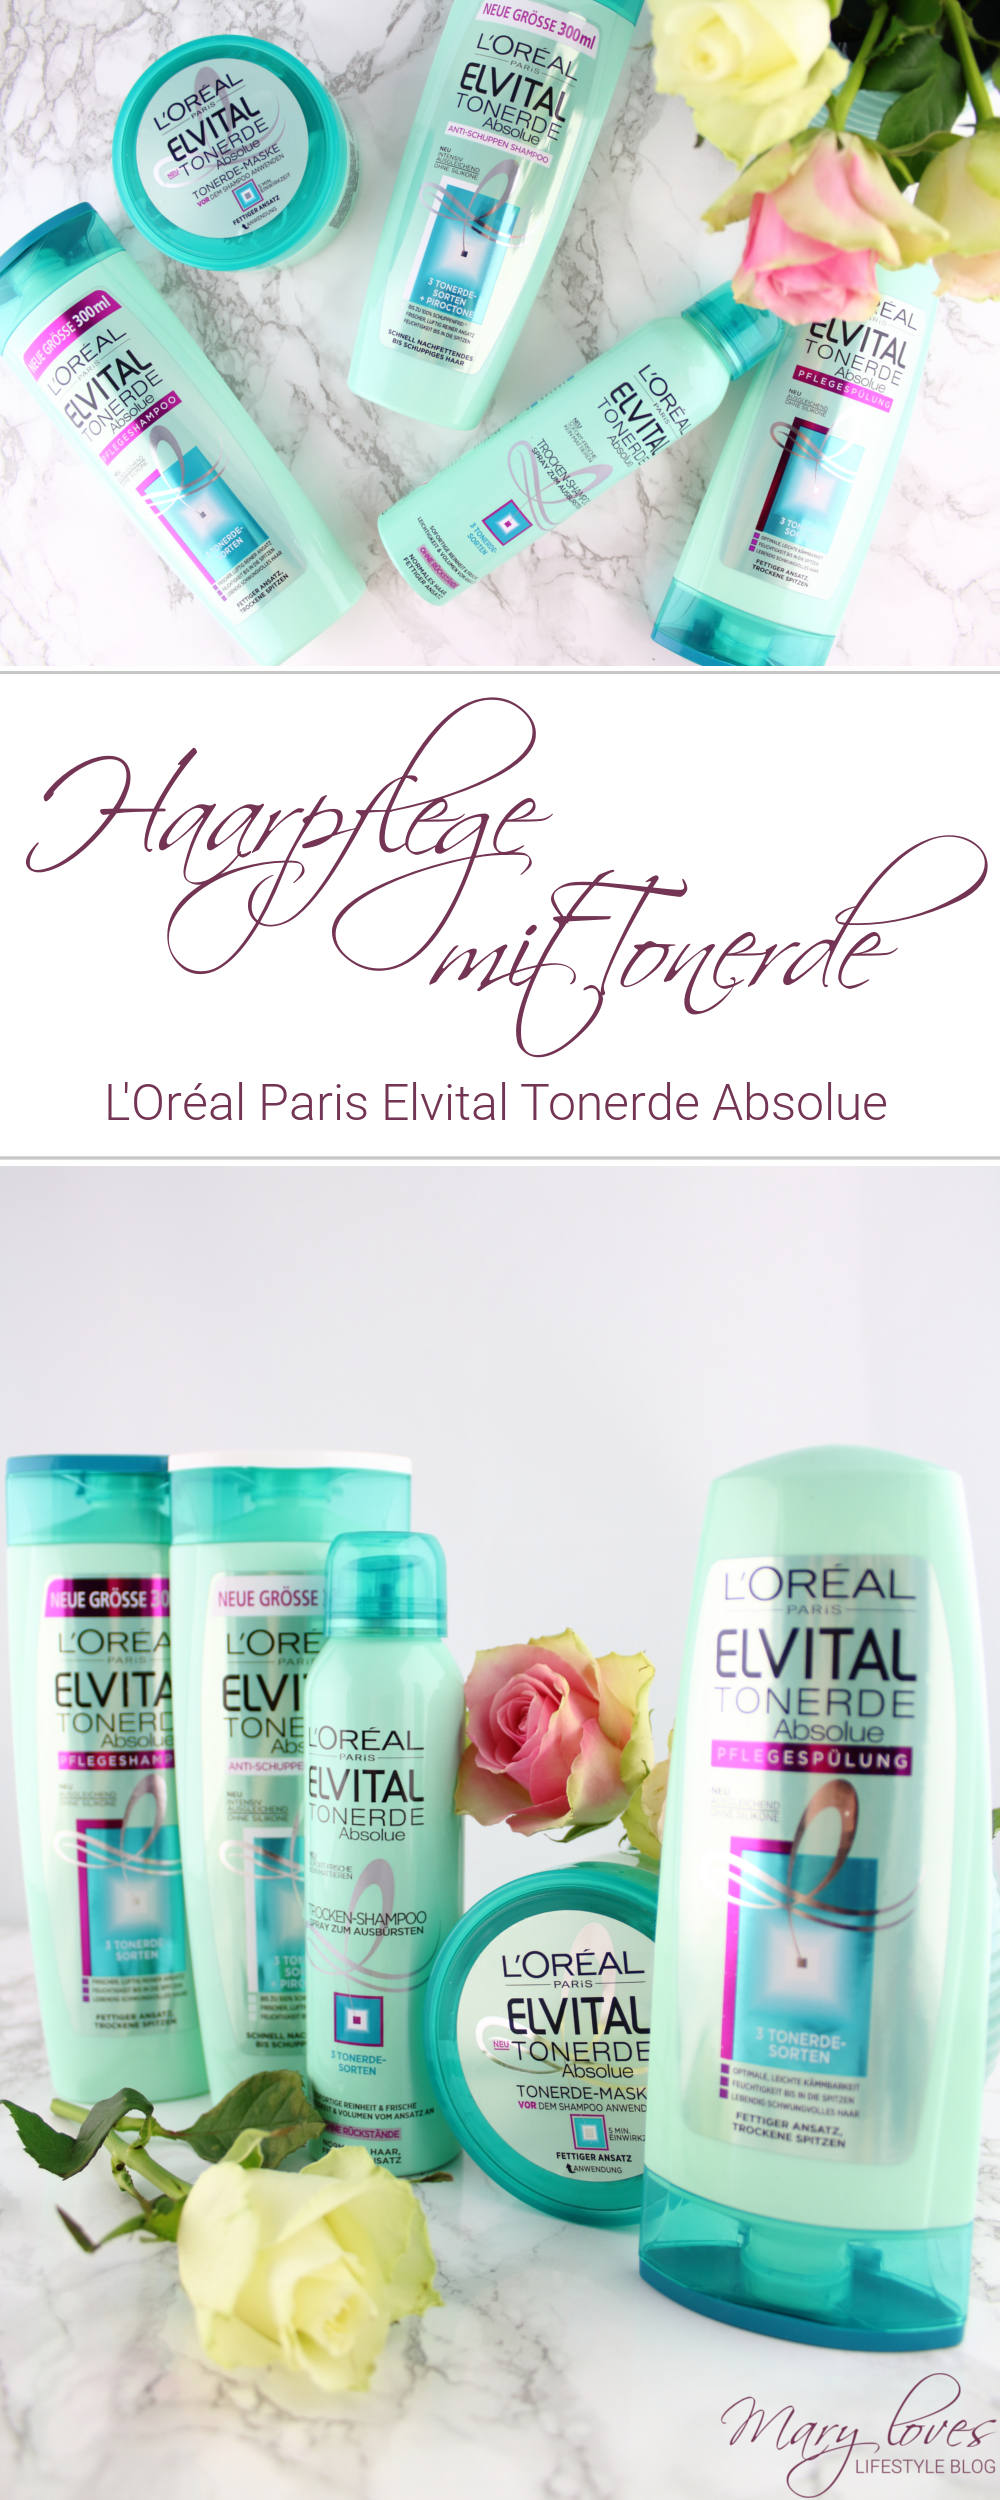 Haarpflege mit Tonerde - L'Oréal Paris Elvital Tonerde Absolue Haarpflege-Serie im Test - Haarpflegeprodukte mit Tonerde - Tonerde-Maske - Trocken-Shampoo - Tonerde Pflegespülung - Anti-Schuppen Shampoo